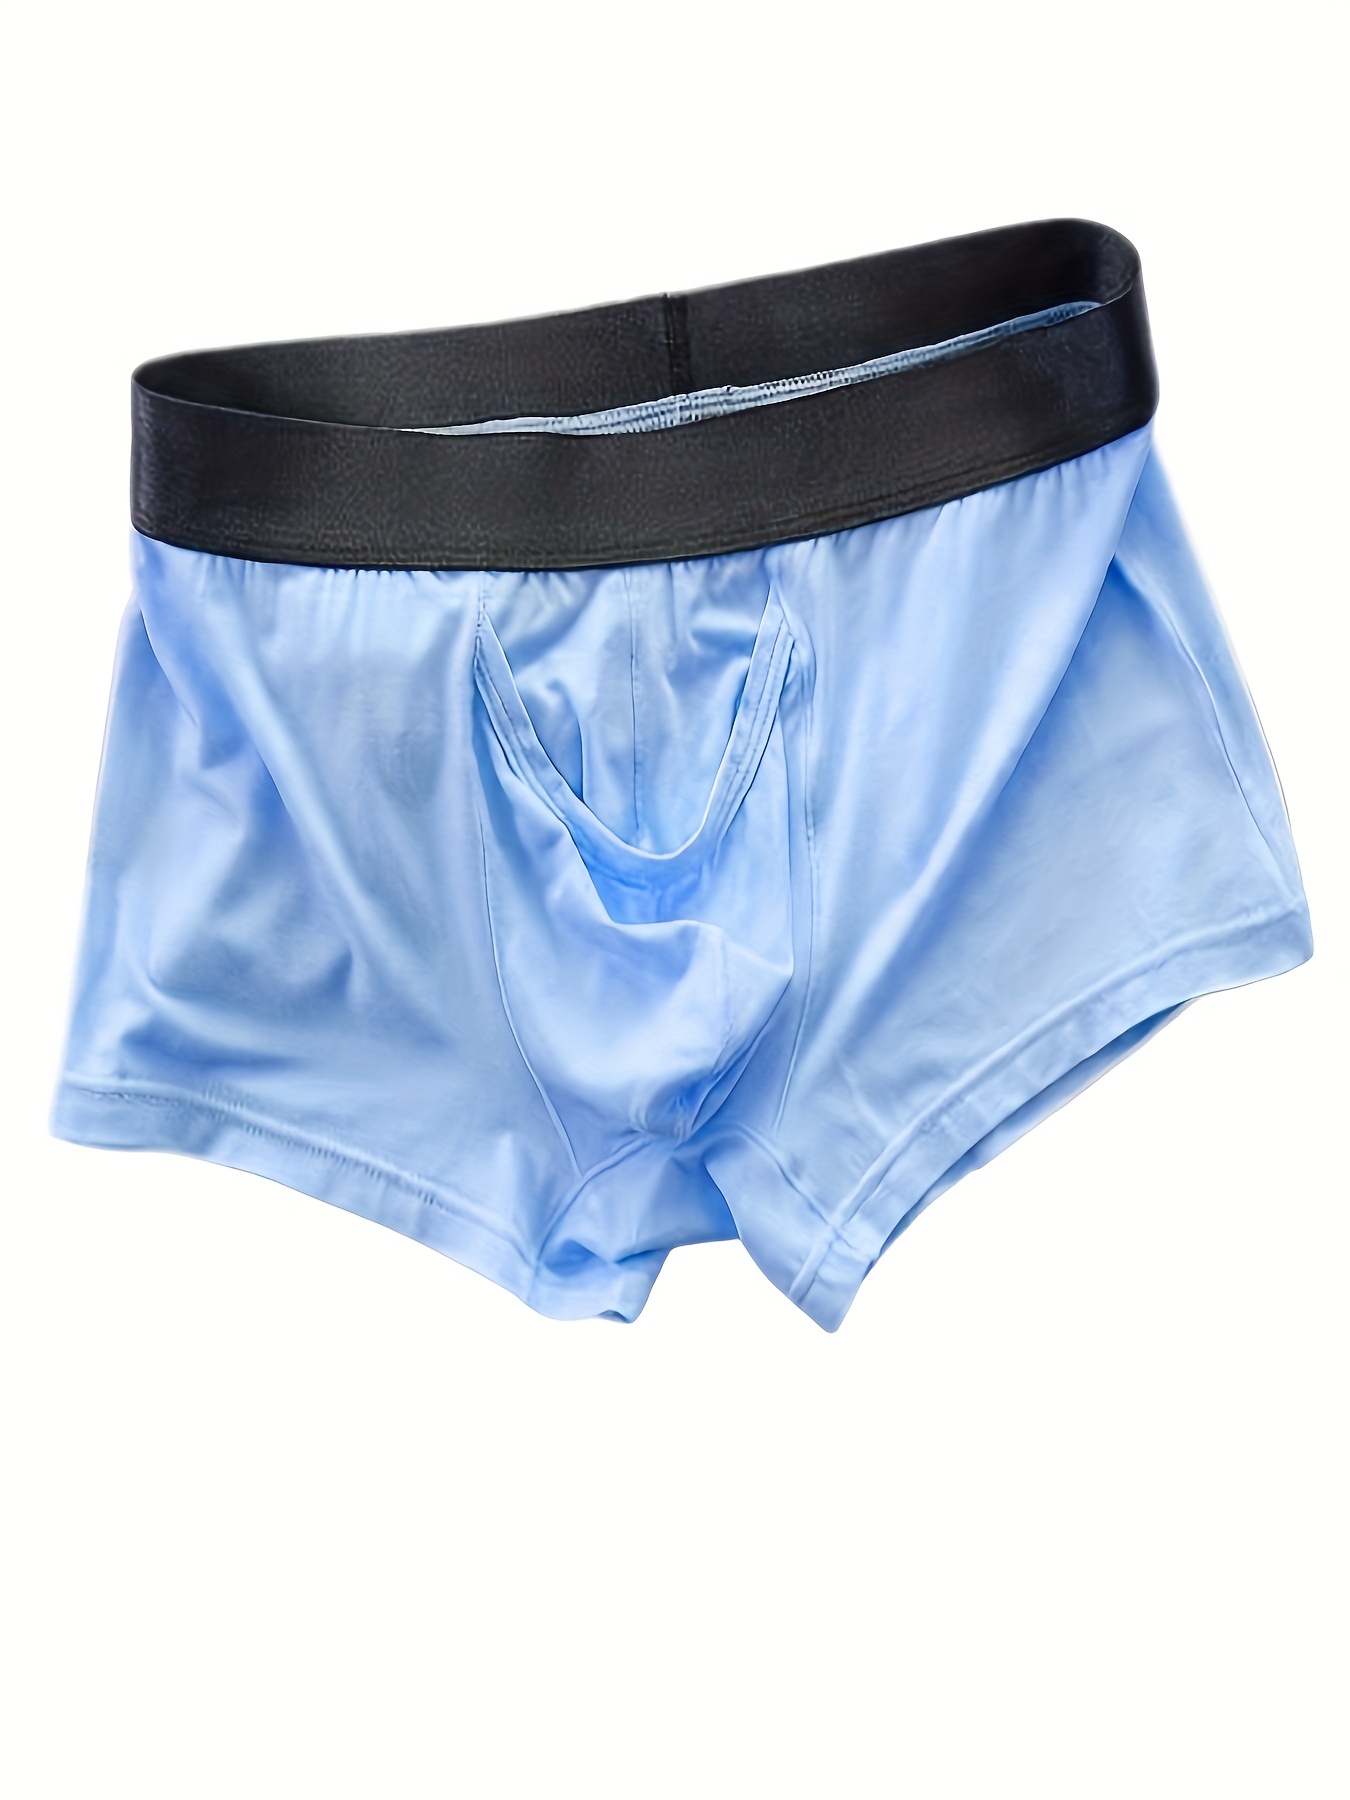 Naturemore Men's sexy Modal Elephant Underwear Print Guns Separate Briefs